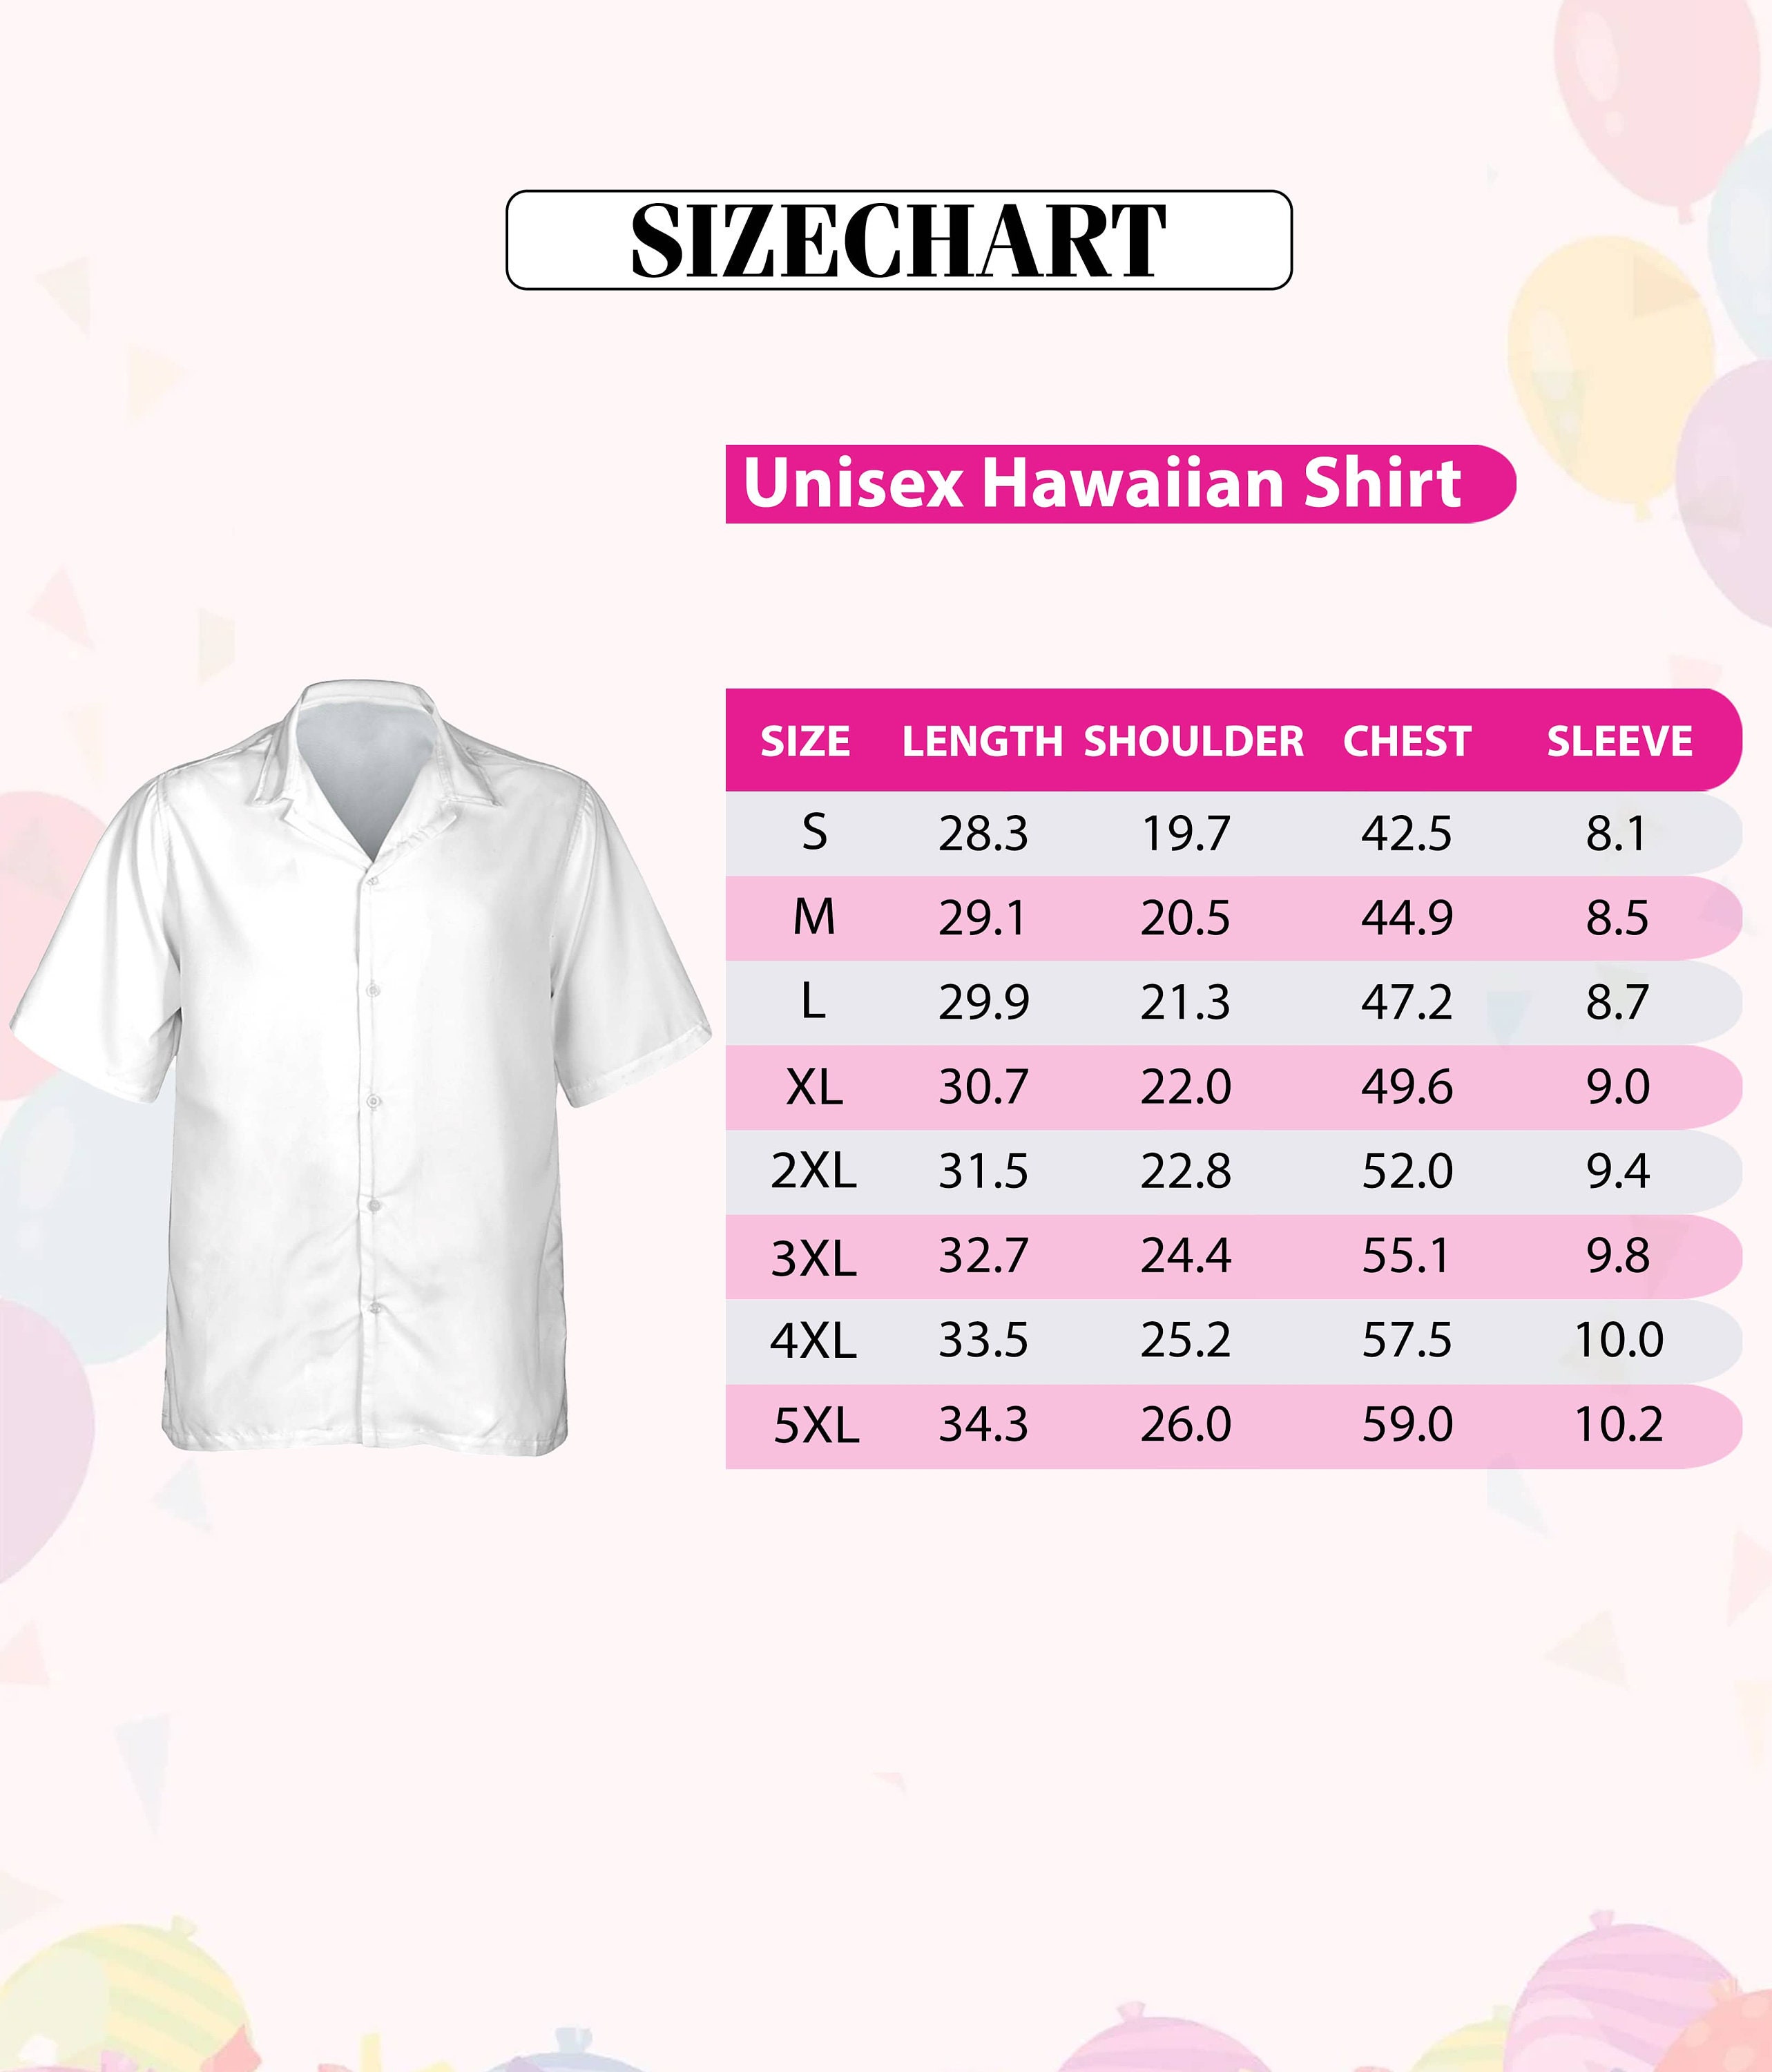 All Characters Collection Hawaii Shirt, Cartoon Button Up Shirt Holiday